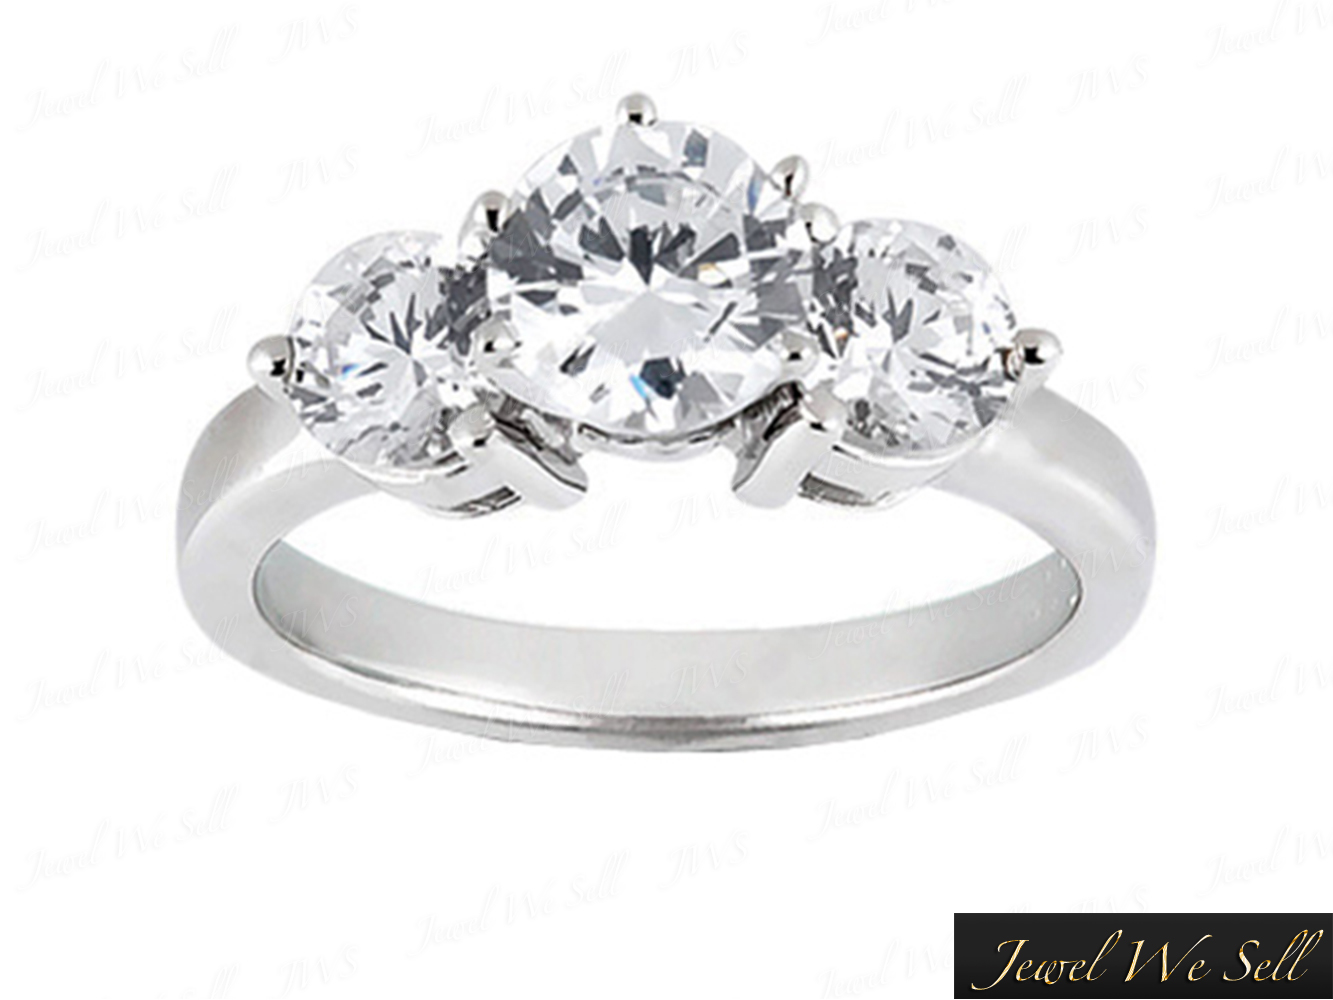 3 4ct Round Cut Diamond 3 Stone Engagement Ring 14k White Gold G SI1 Prong Set